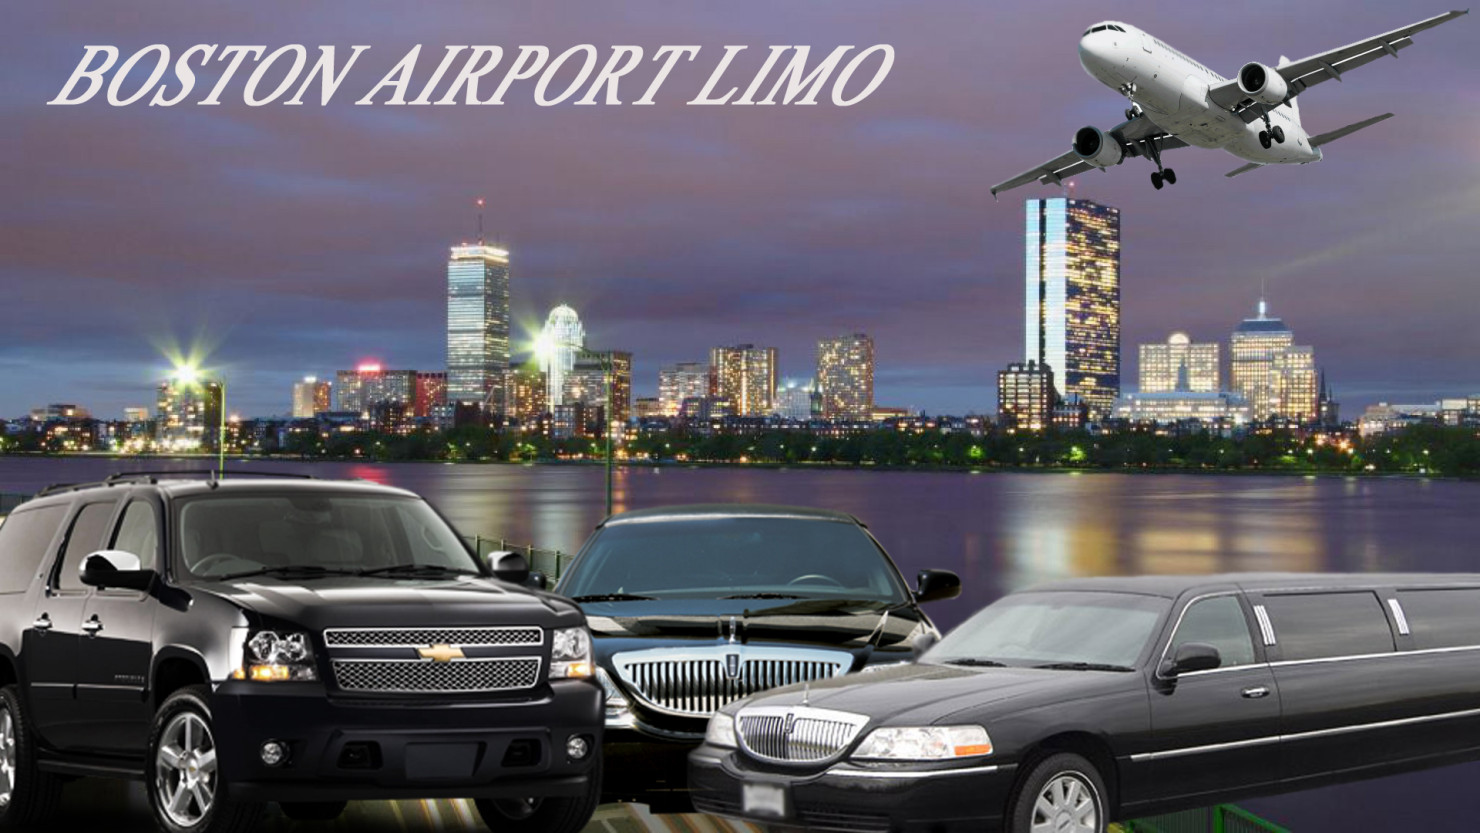 BOSTON AIRPORT LIMO